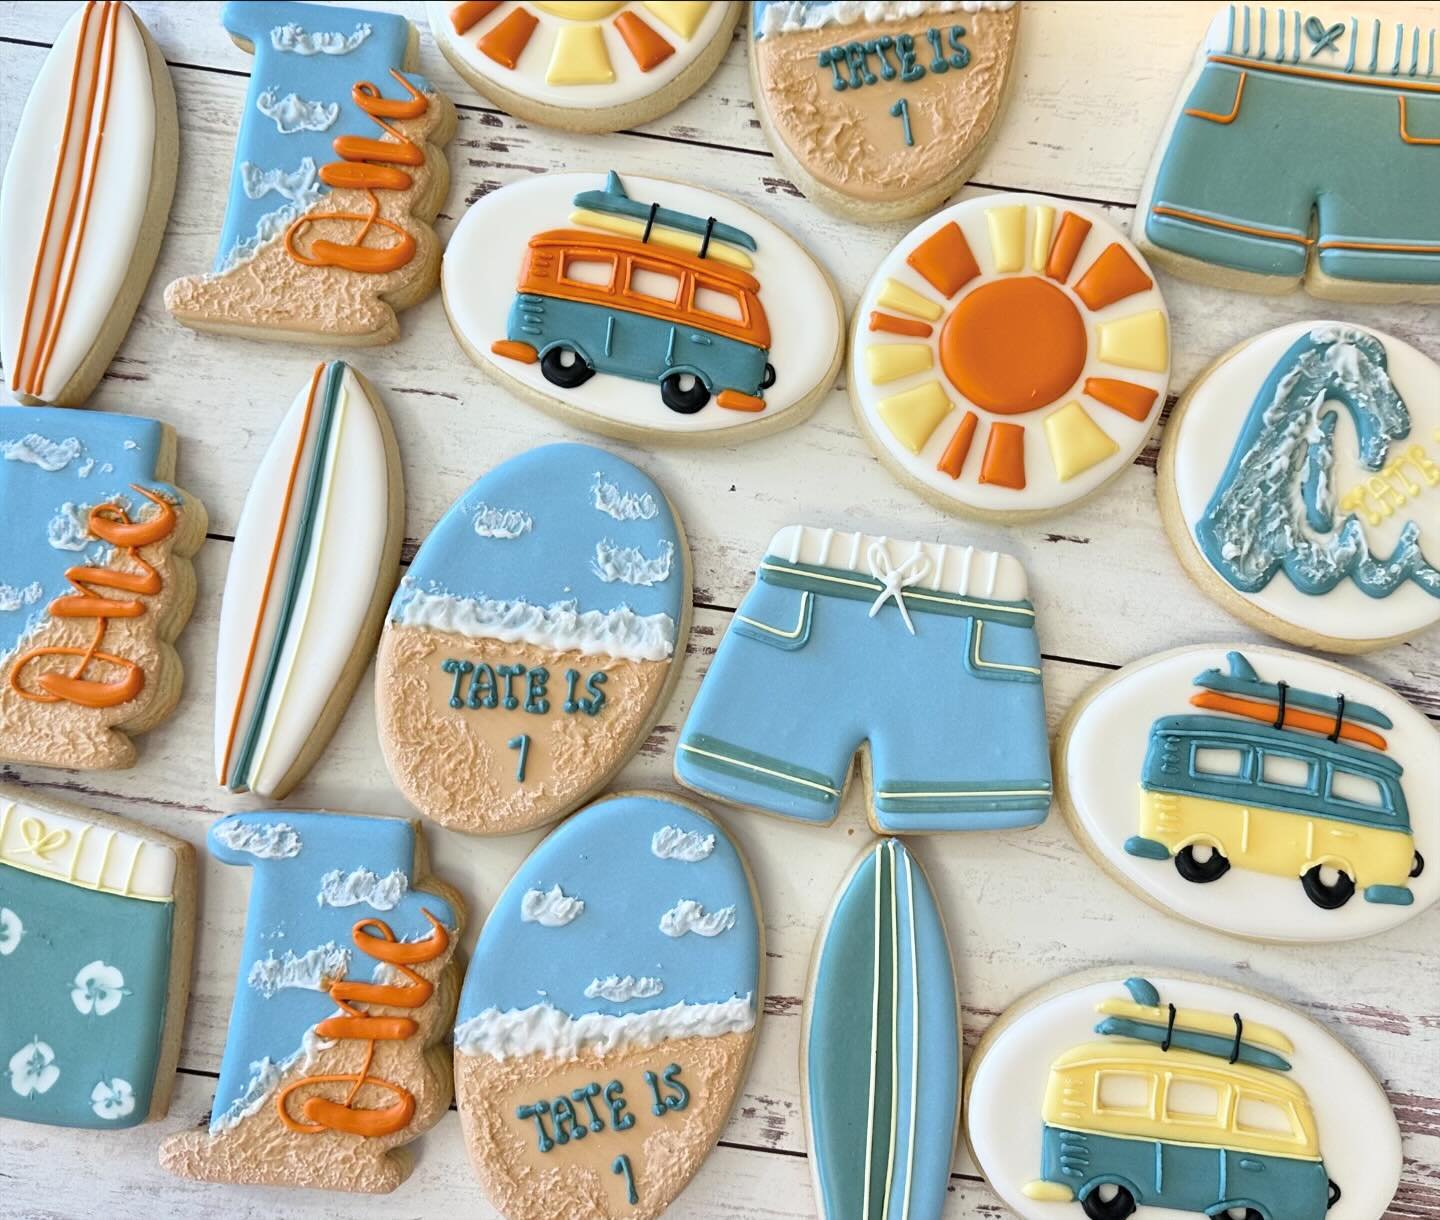 Happy 1st birthday Tate! 

#jojoscookieboutique #surfcookies #surfercookies #hayesvillenc #customcookies #partyfavors #decoratedcookies